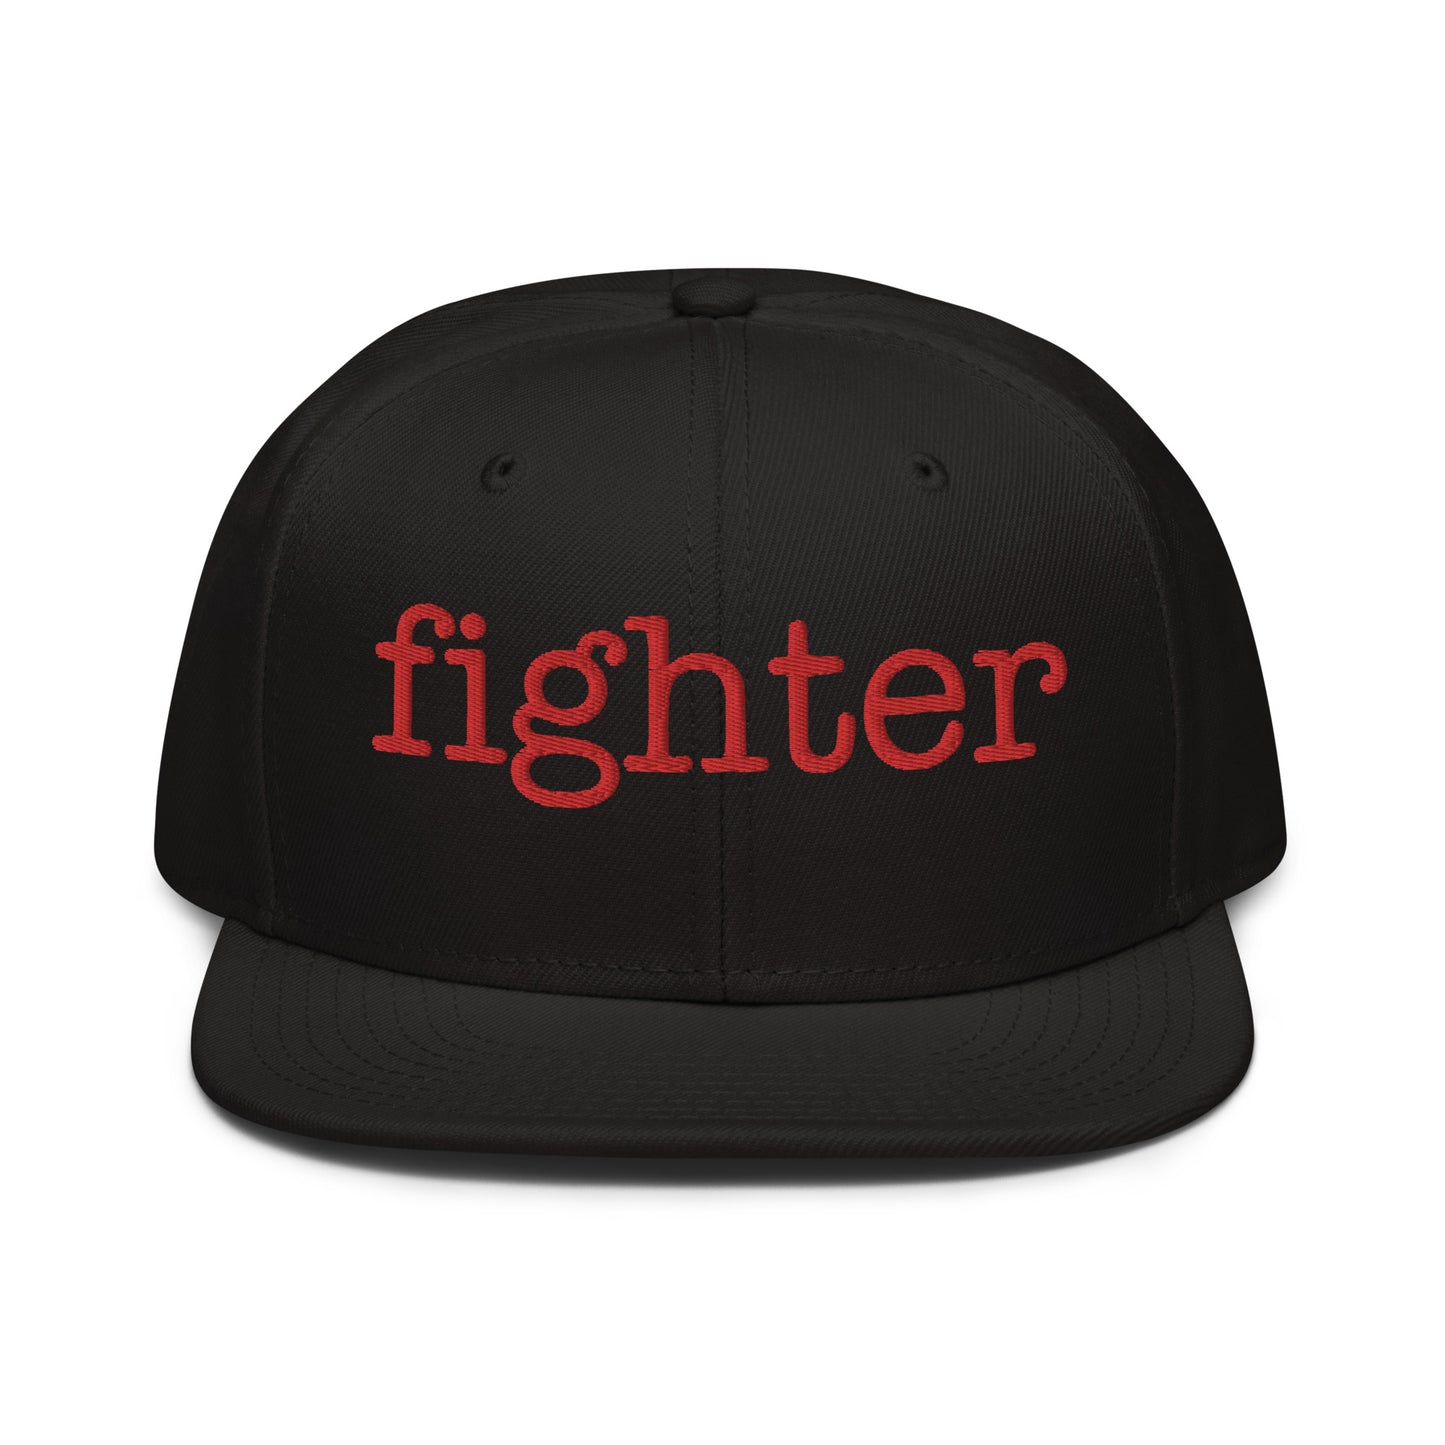 Fighter Snapback Hat